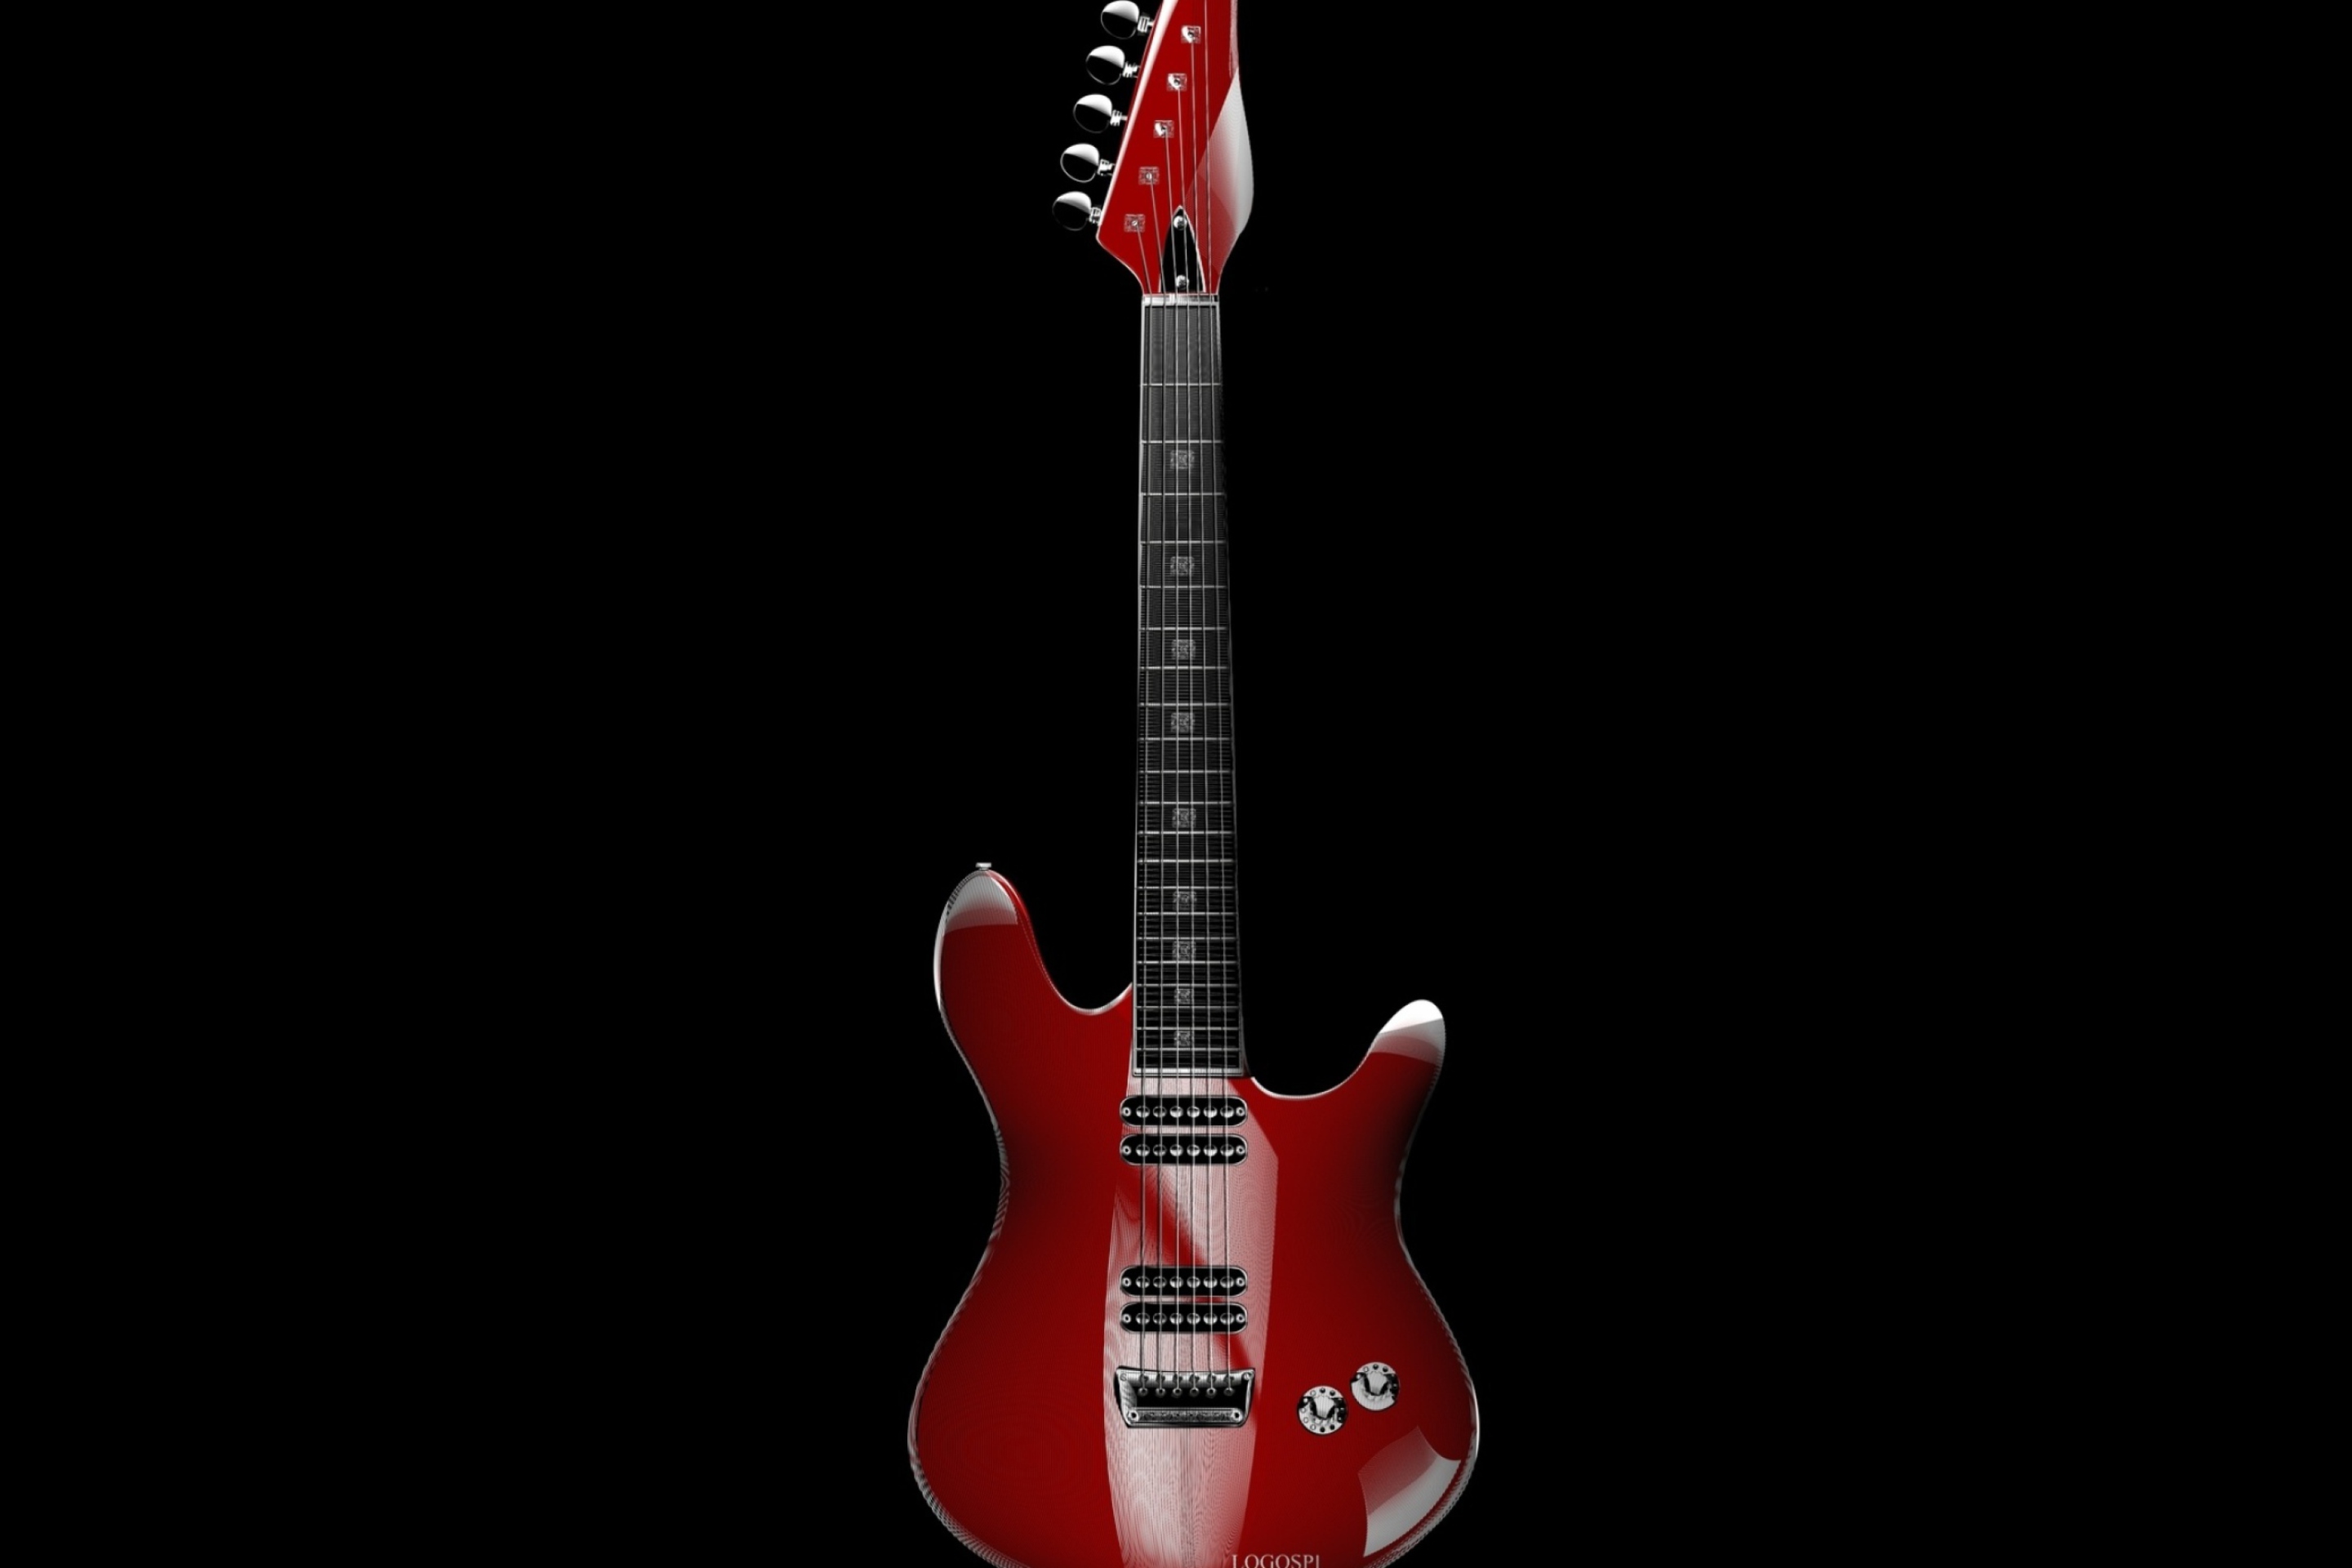 Red Guitar wallpaper 2880x1920